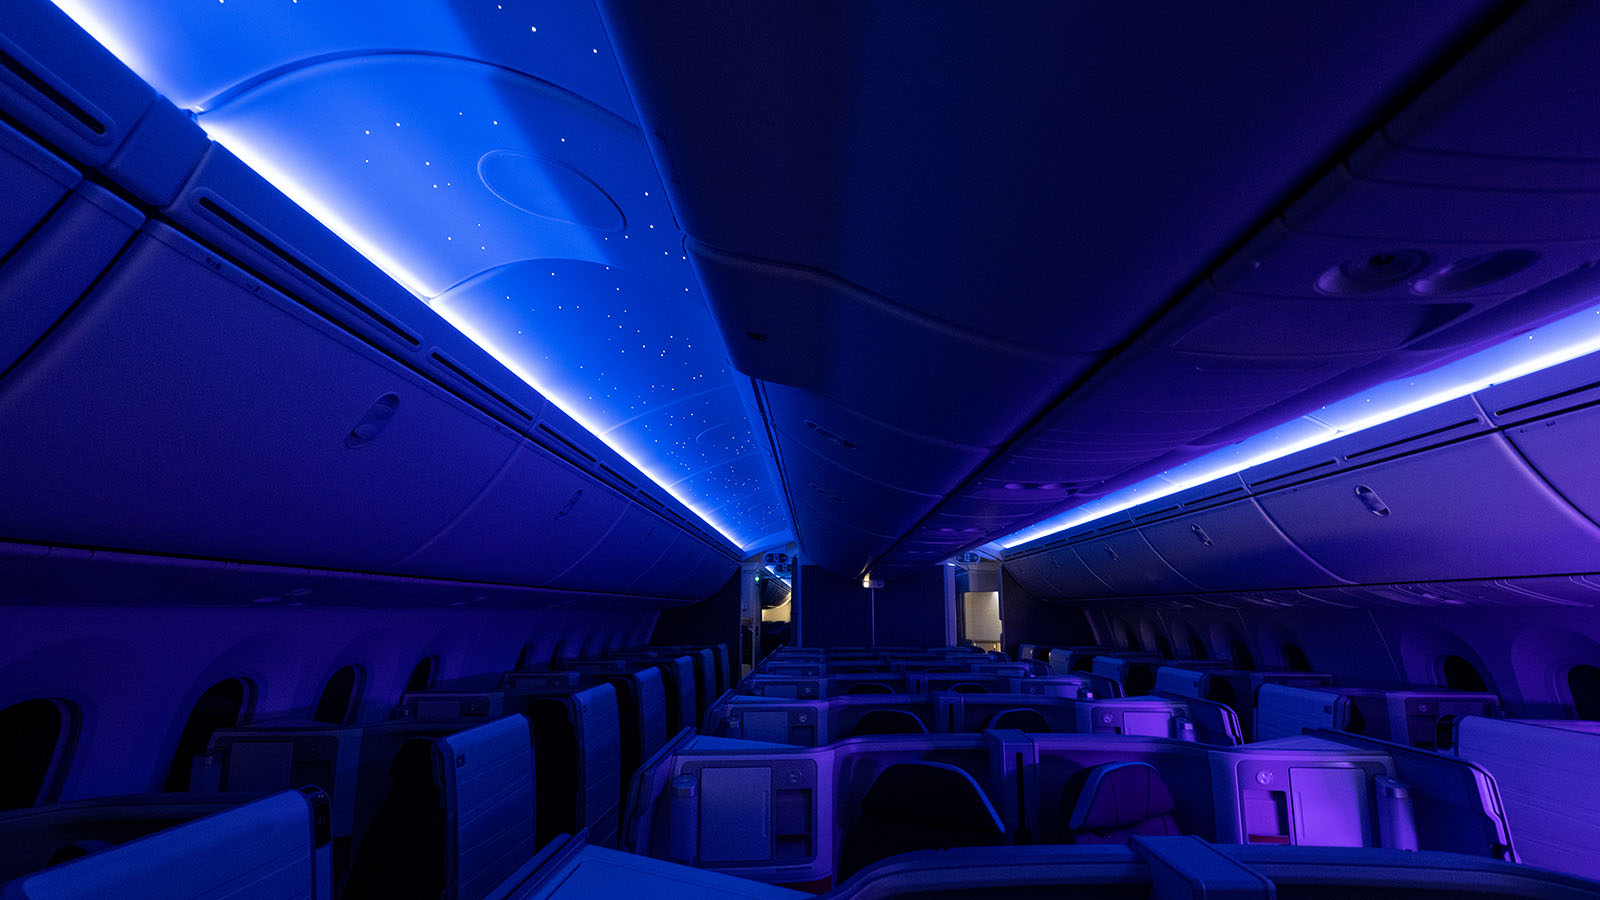 Bedtime lighting on Hawaiian Airlines' Dreamliner